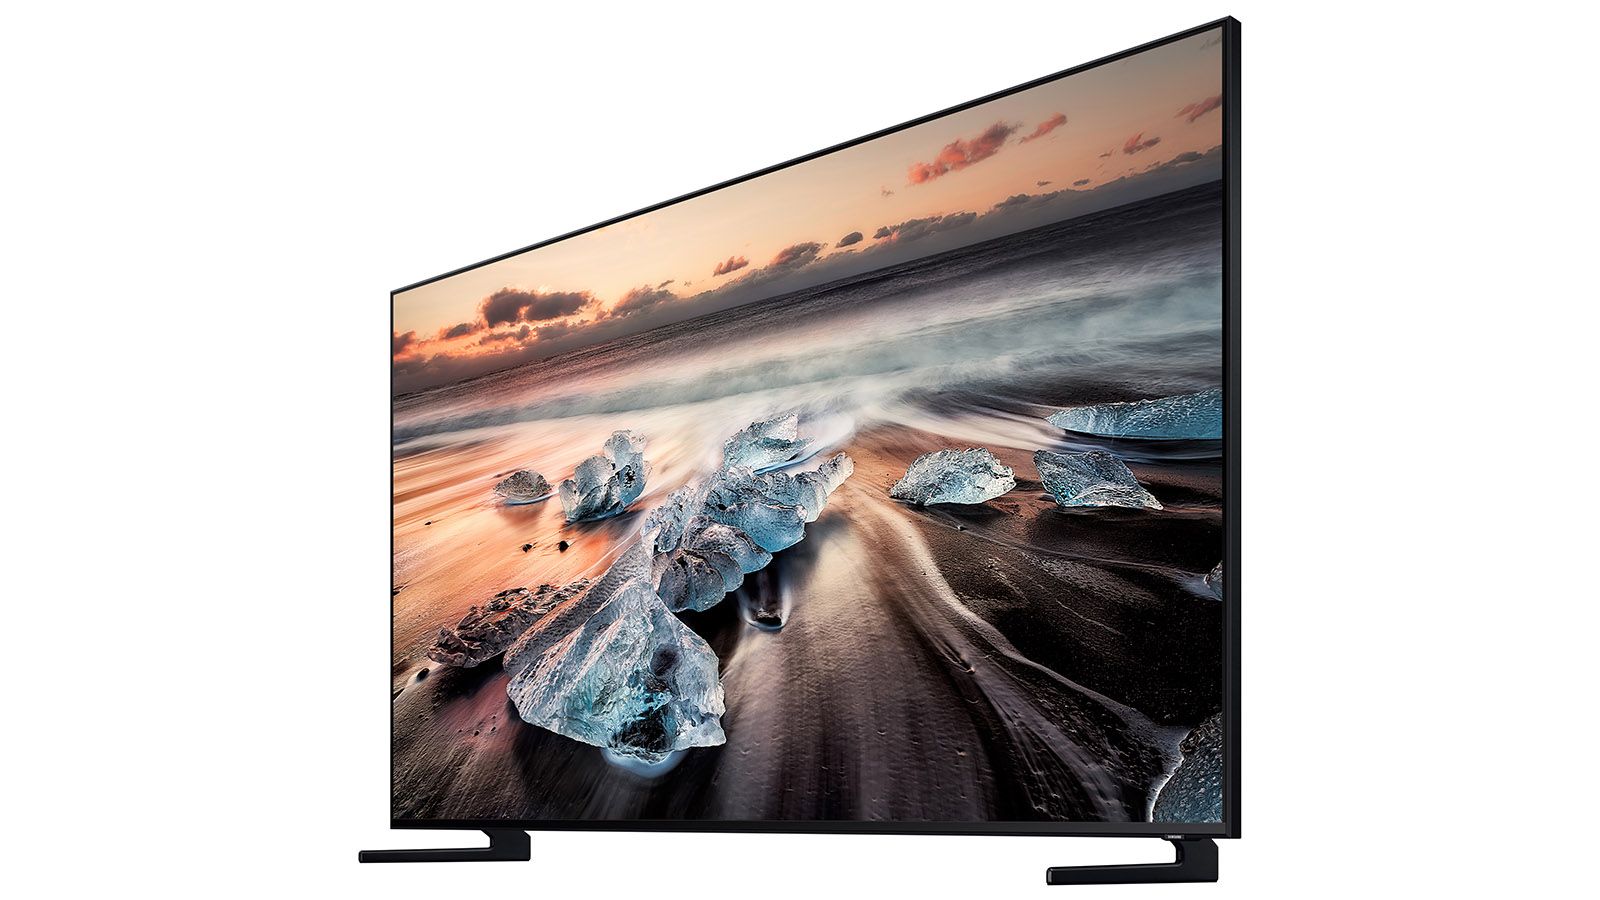 Samsung Q900 8K TV review image 5